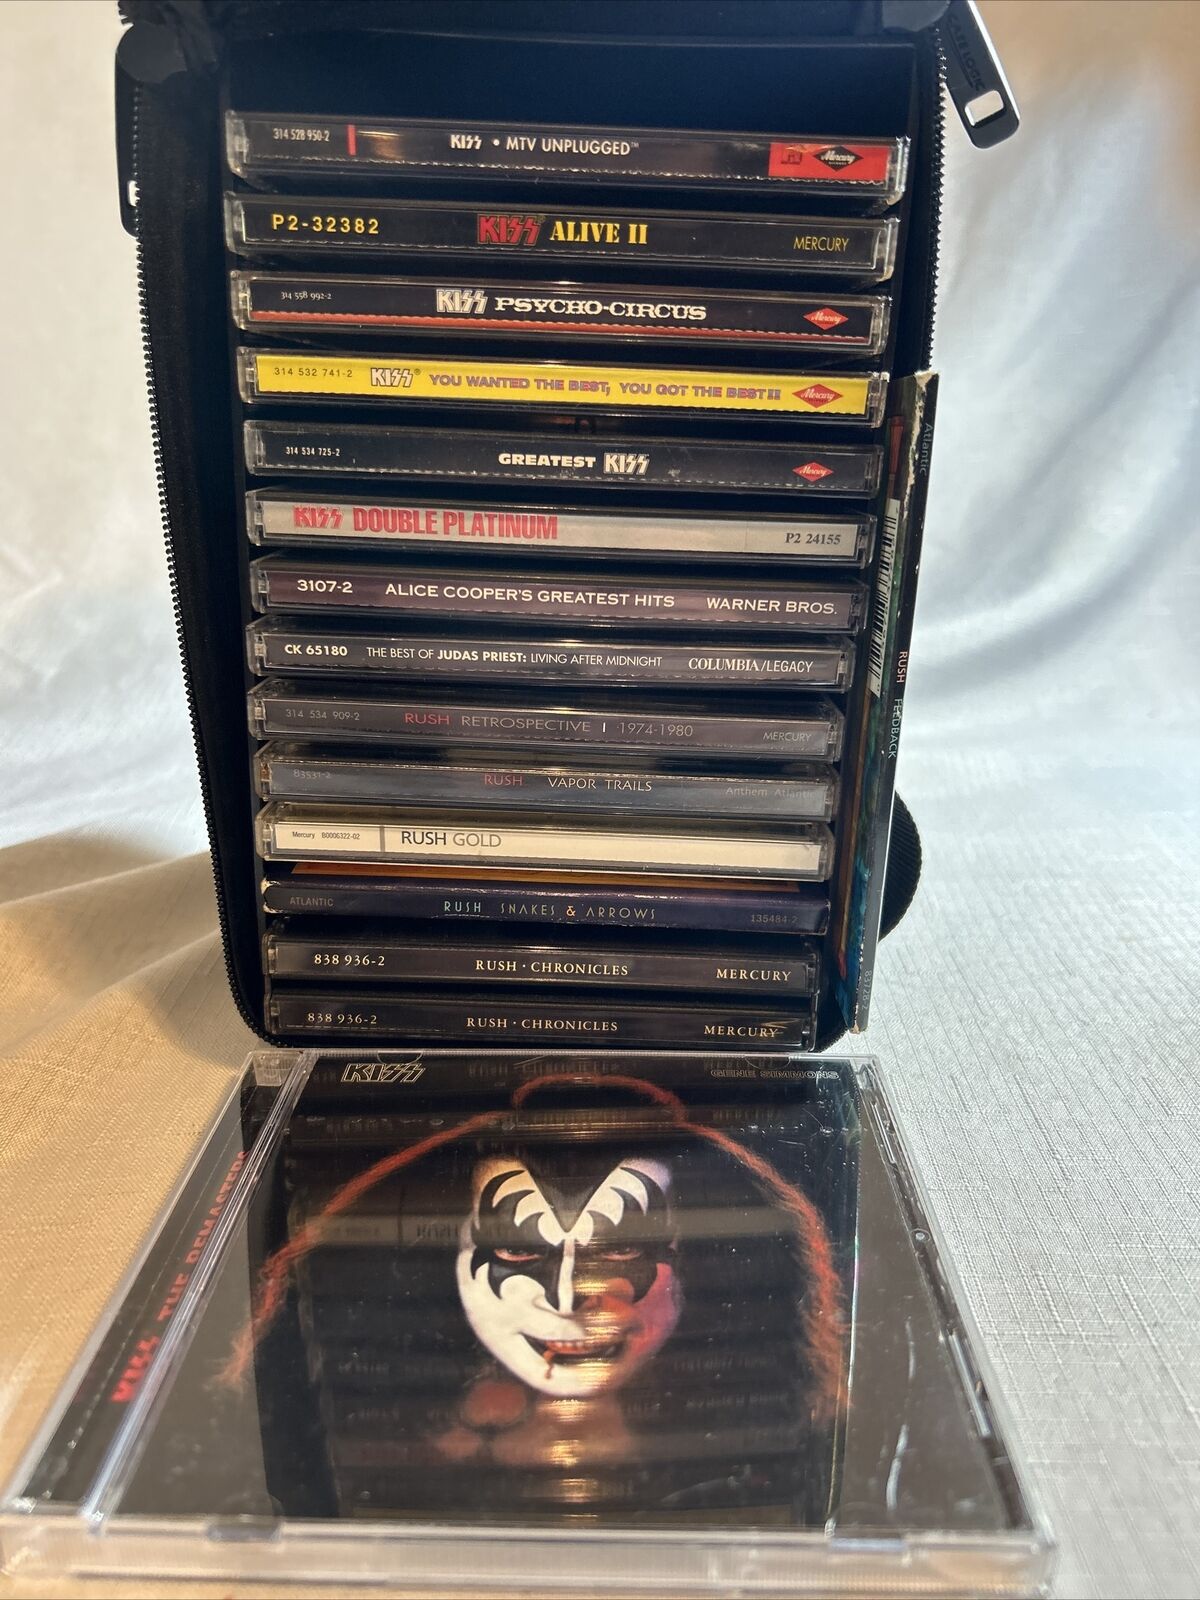 CD LOT 15 -KISS Gene Simmons 1978 Solo Album, Allison Cooper, Judas Priest, Rush